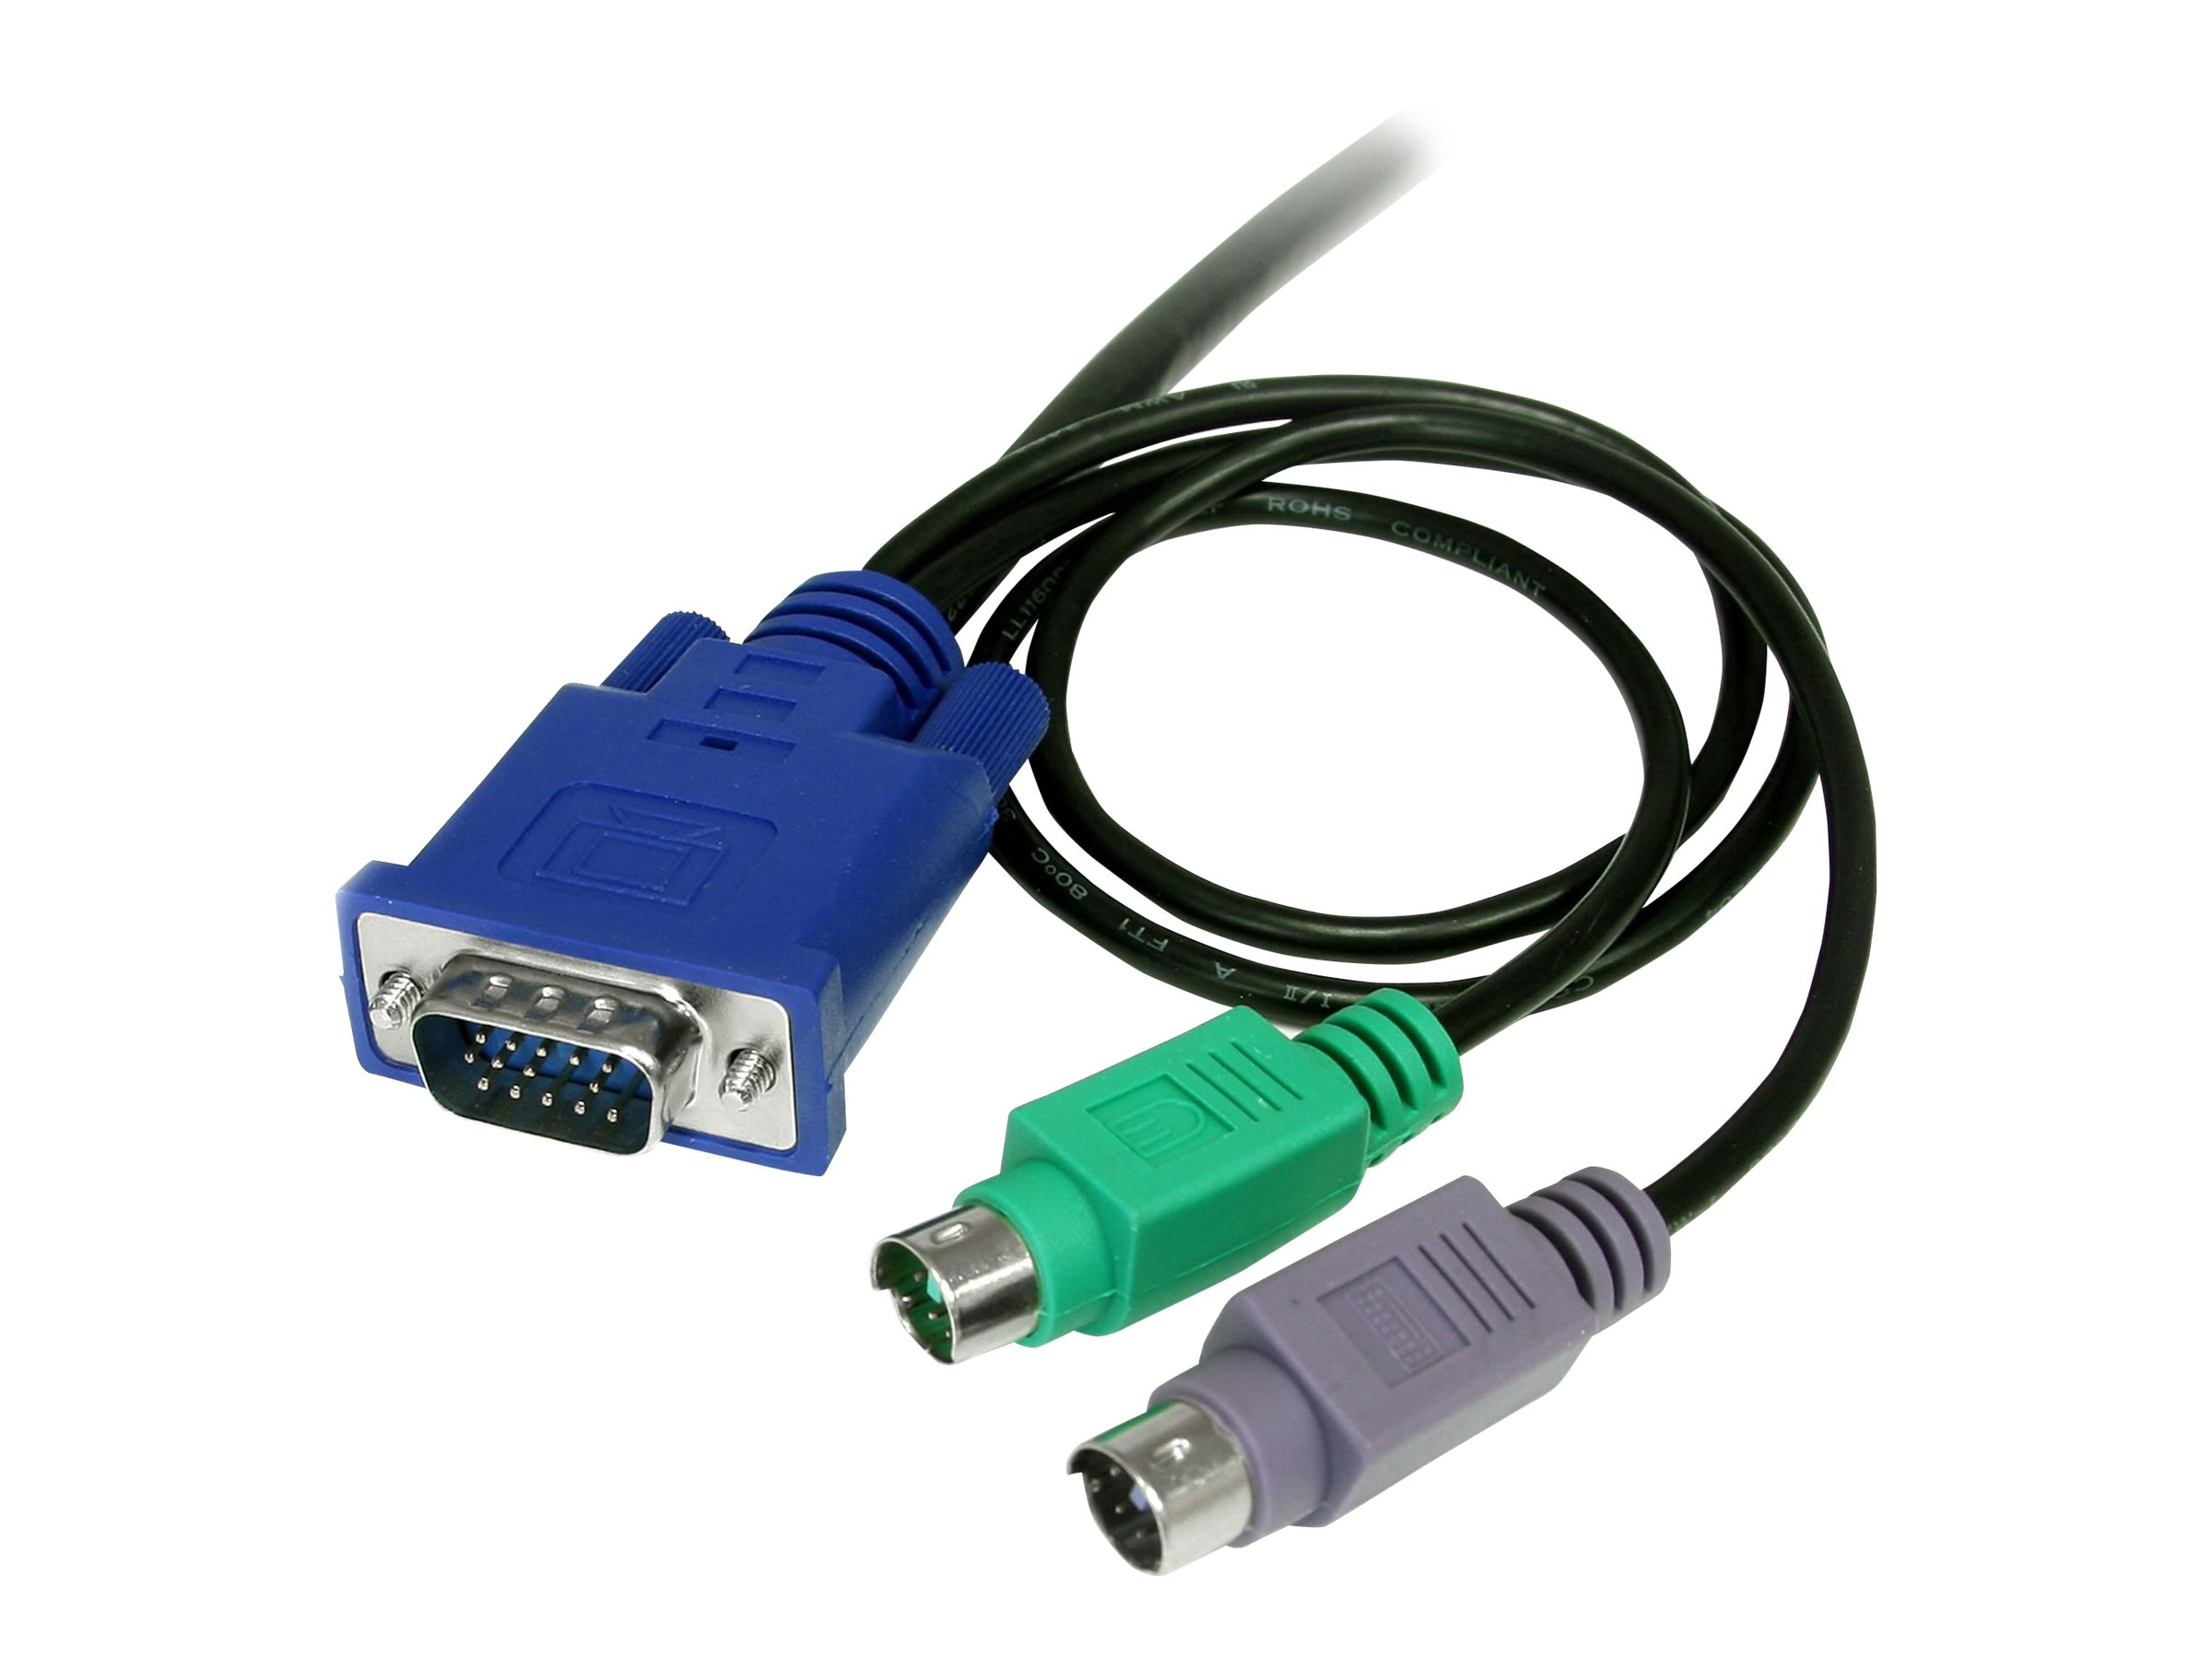 StarTech.com 1,8m 3-in-1 PS/2 VGA KVM Kabel - Kabelsatz für KVM Switch / Umschalter - Tastatur- / Video- / Maus- (KVM-)